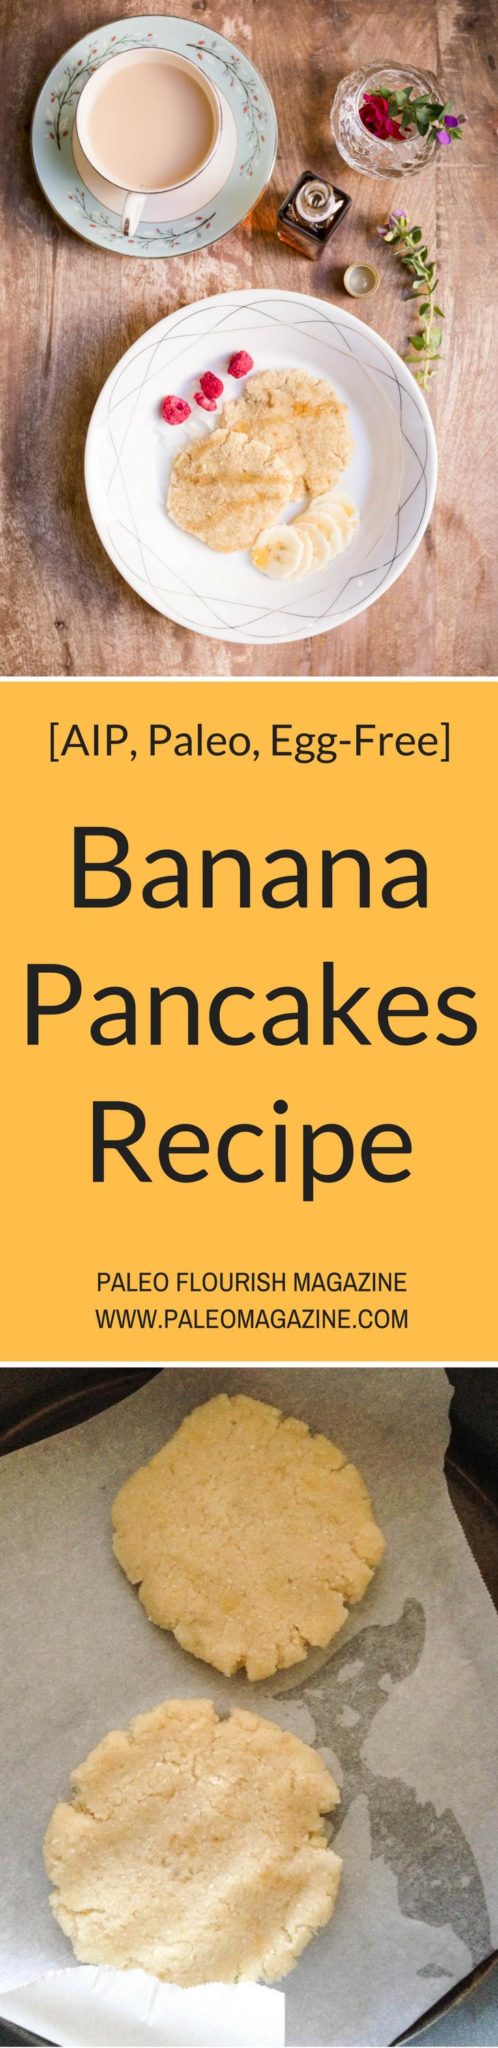 Banana Pancakes Recipe [AIP, Paleo, Egg-Free] #paleo #eggfree #aip #recipes - https://paleoflourish.com/paleo-aip-banana-pancakes-recipe